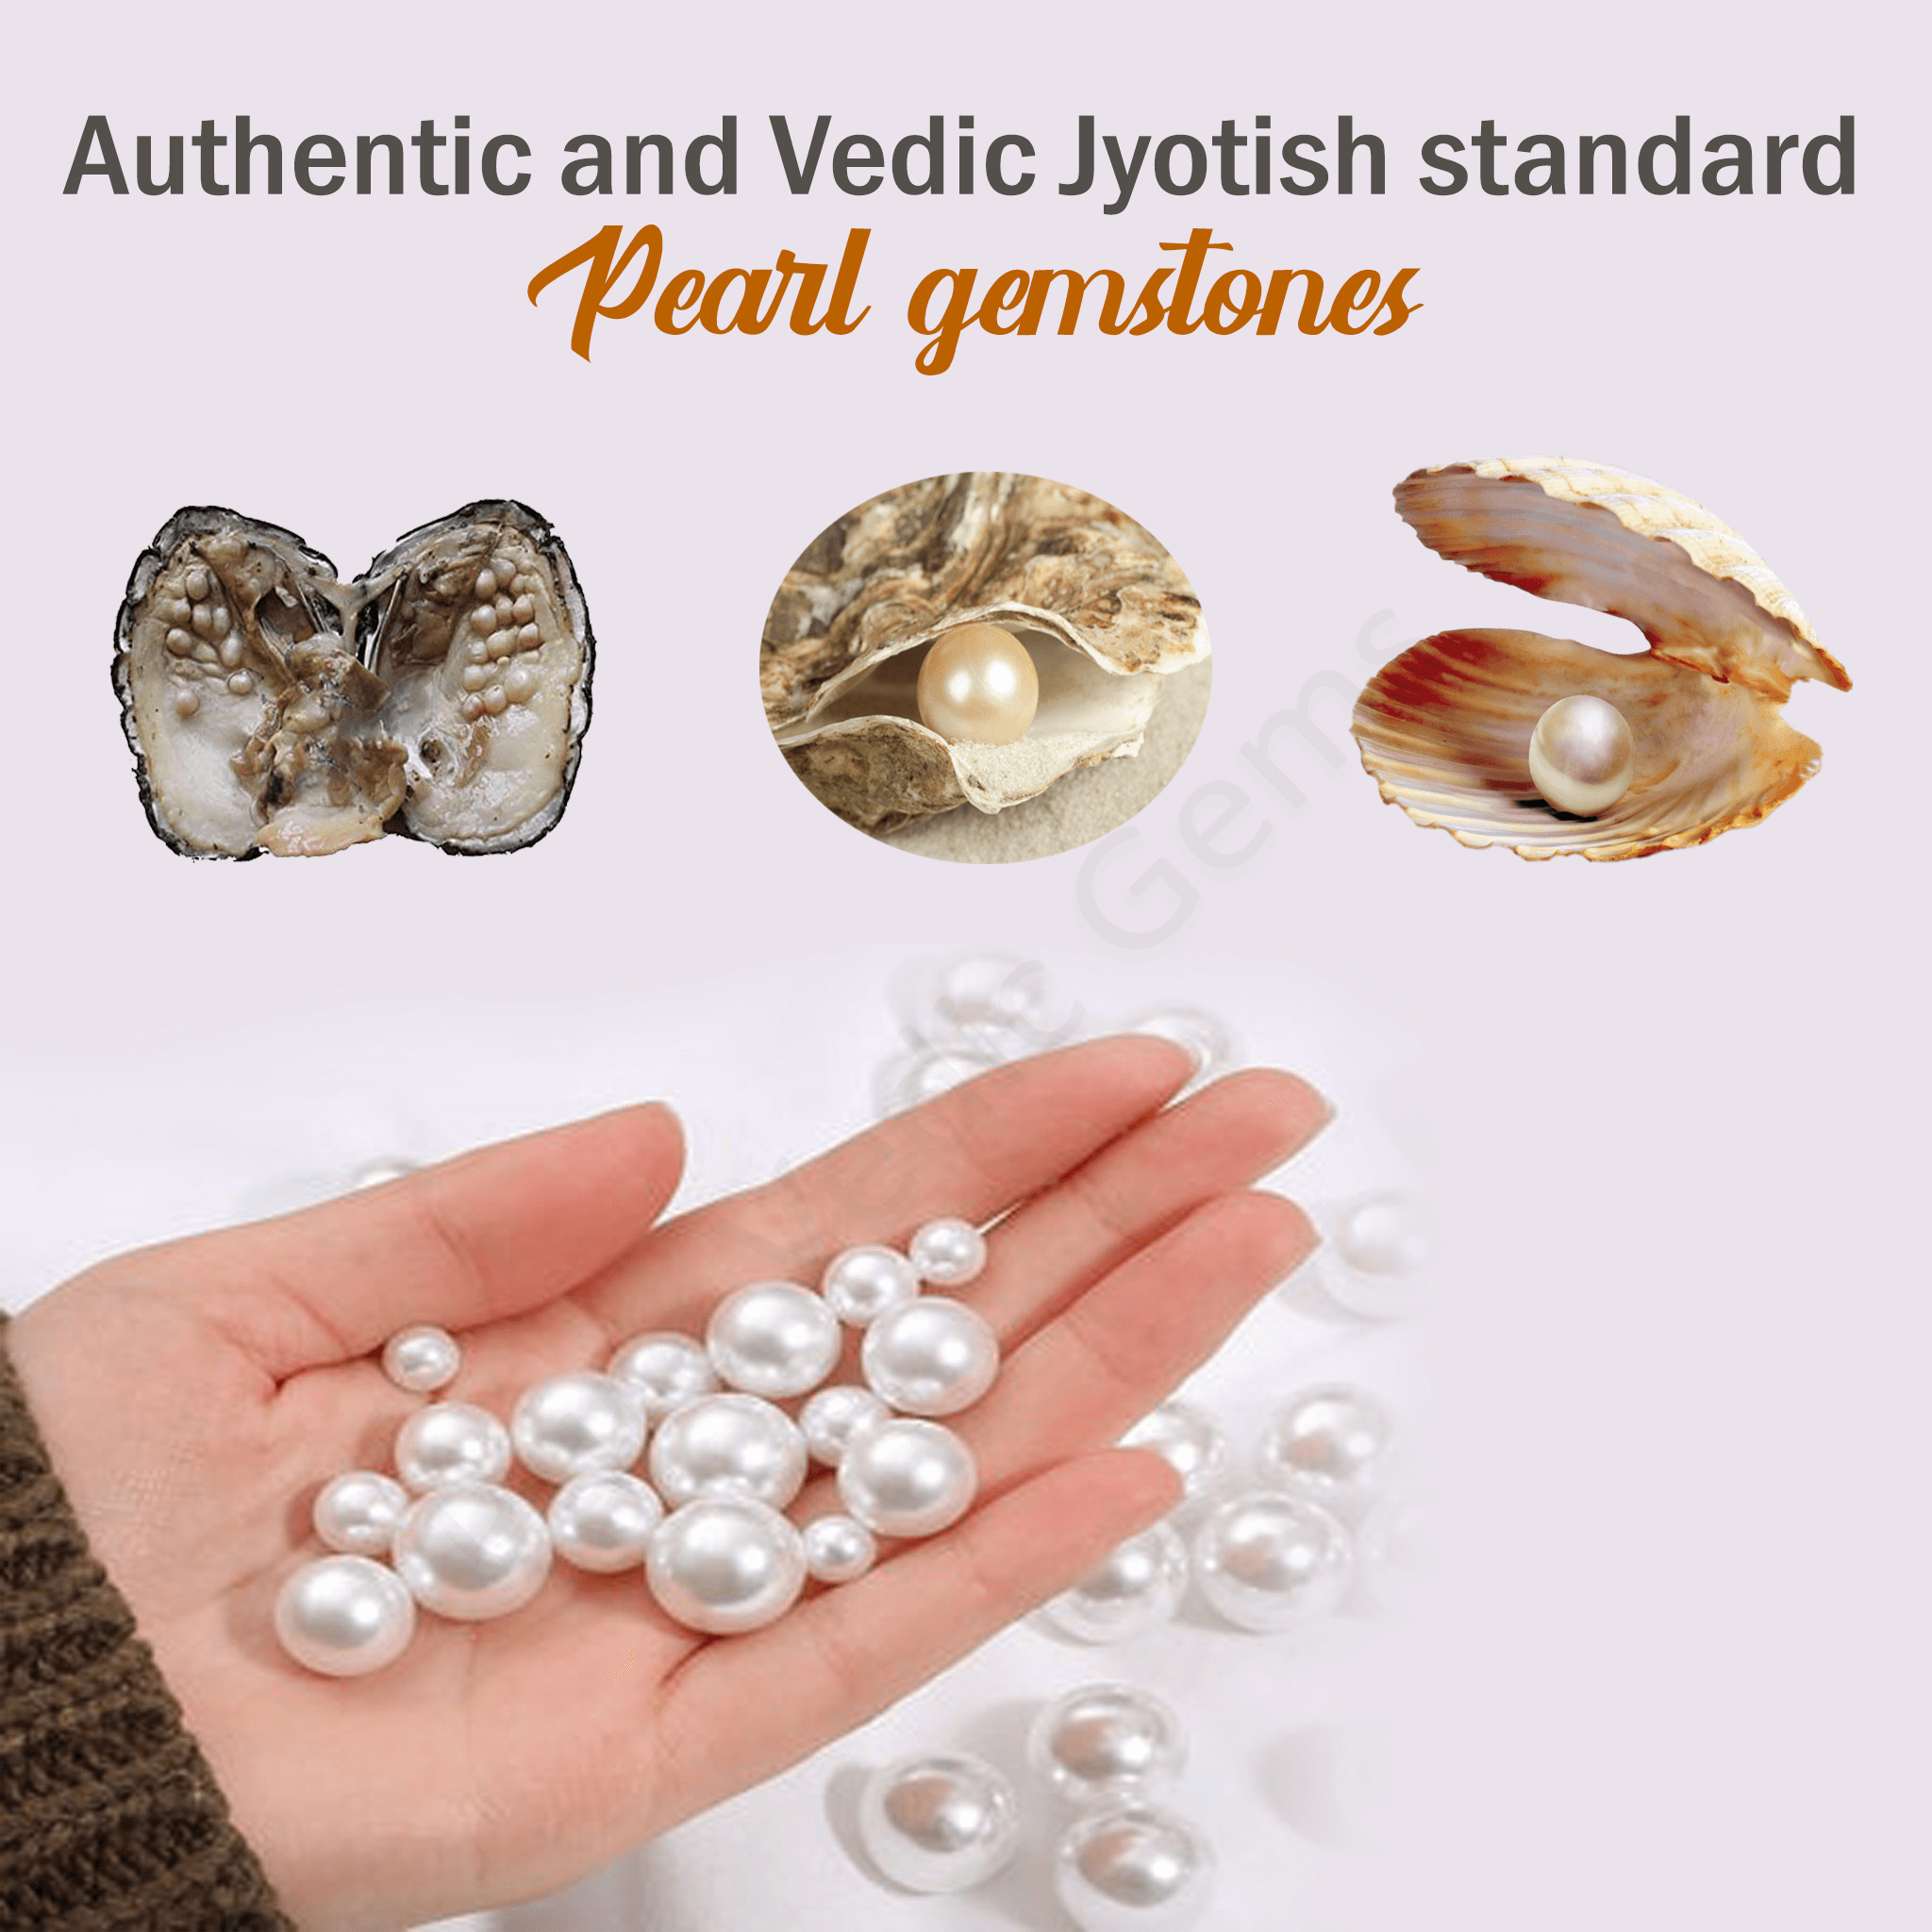 Authentic and Vedic Jyotish standard Pearl gemstones